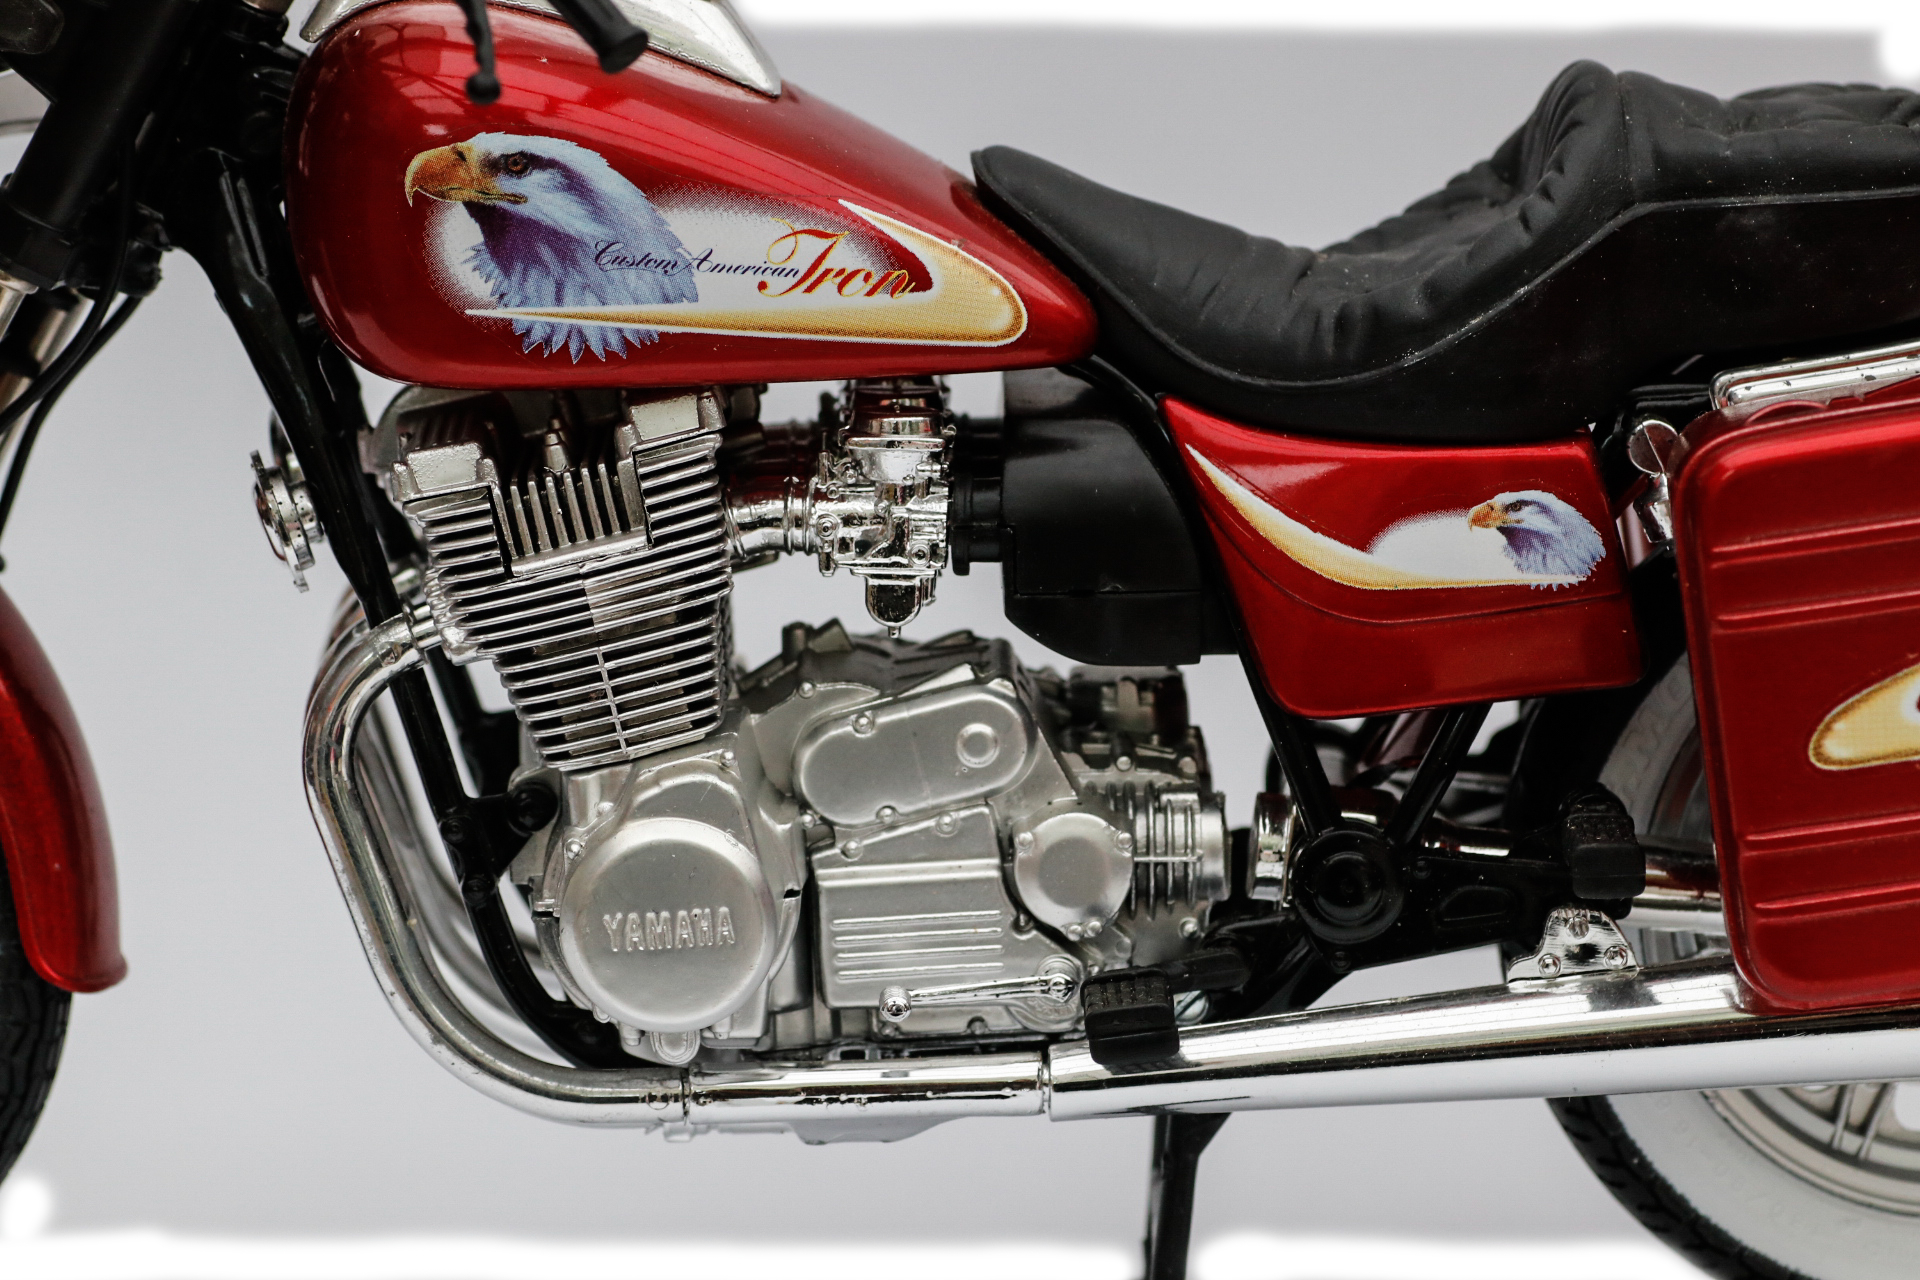 Guiloy Classic American Iron Yamaha XS1100